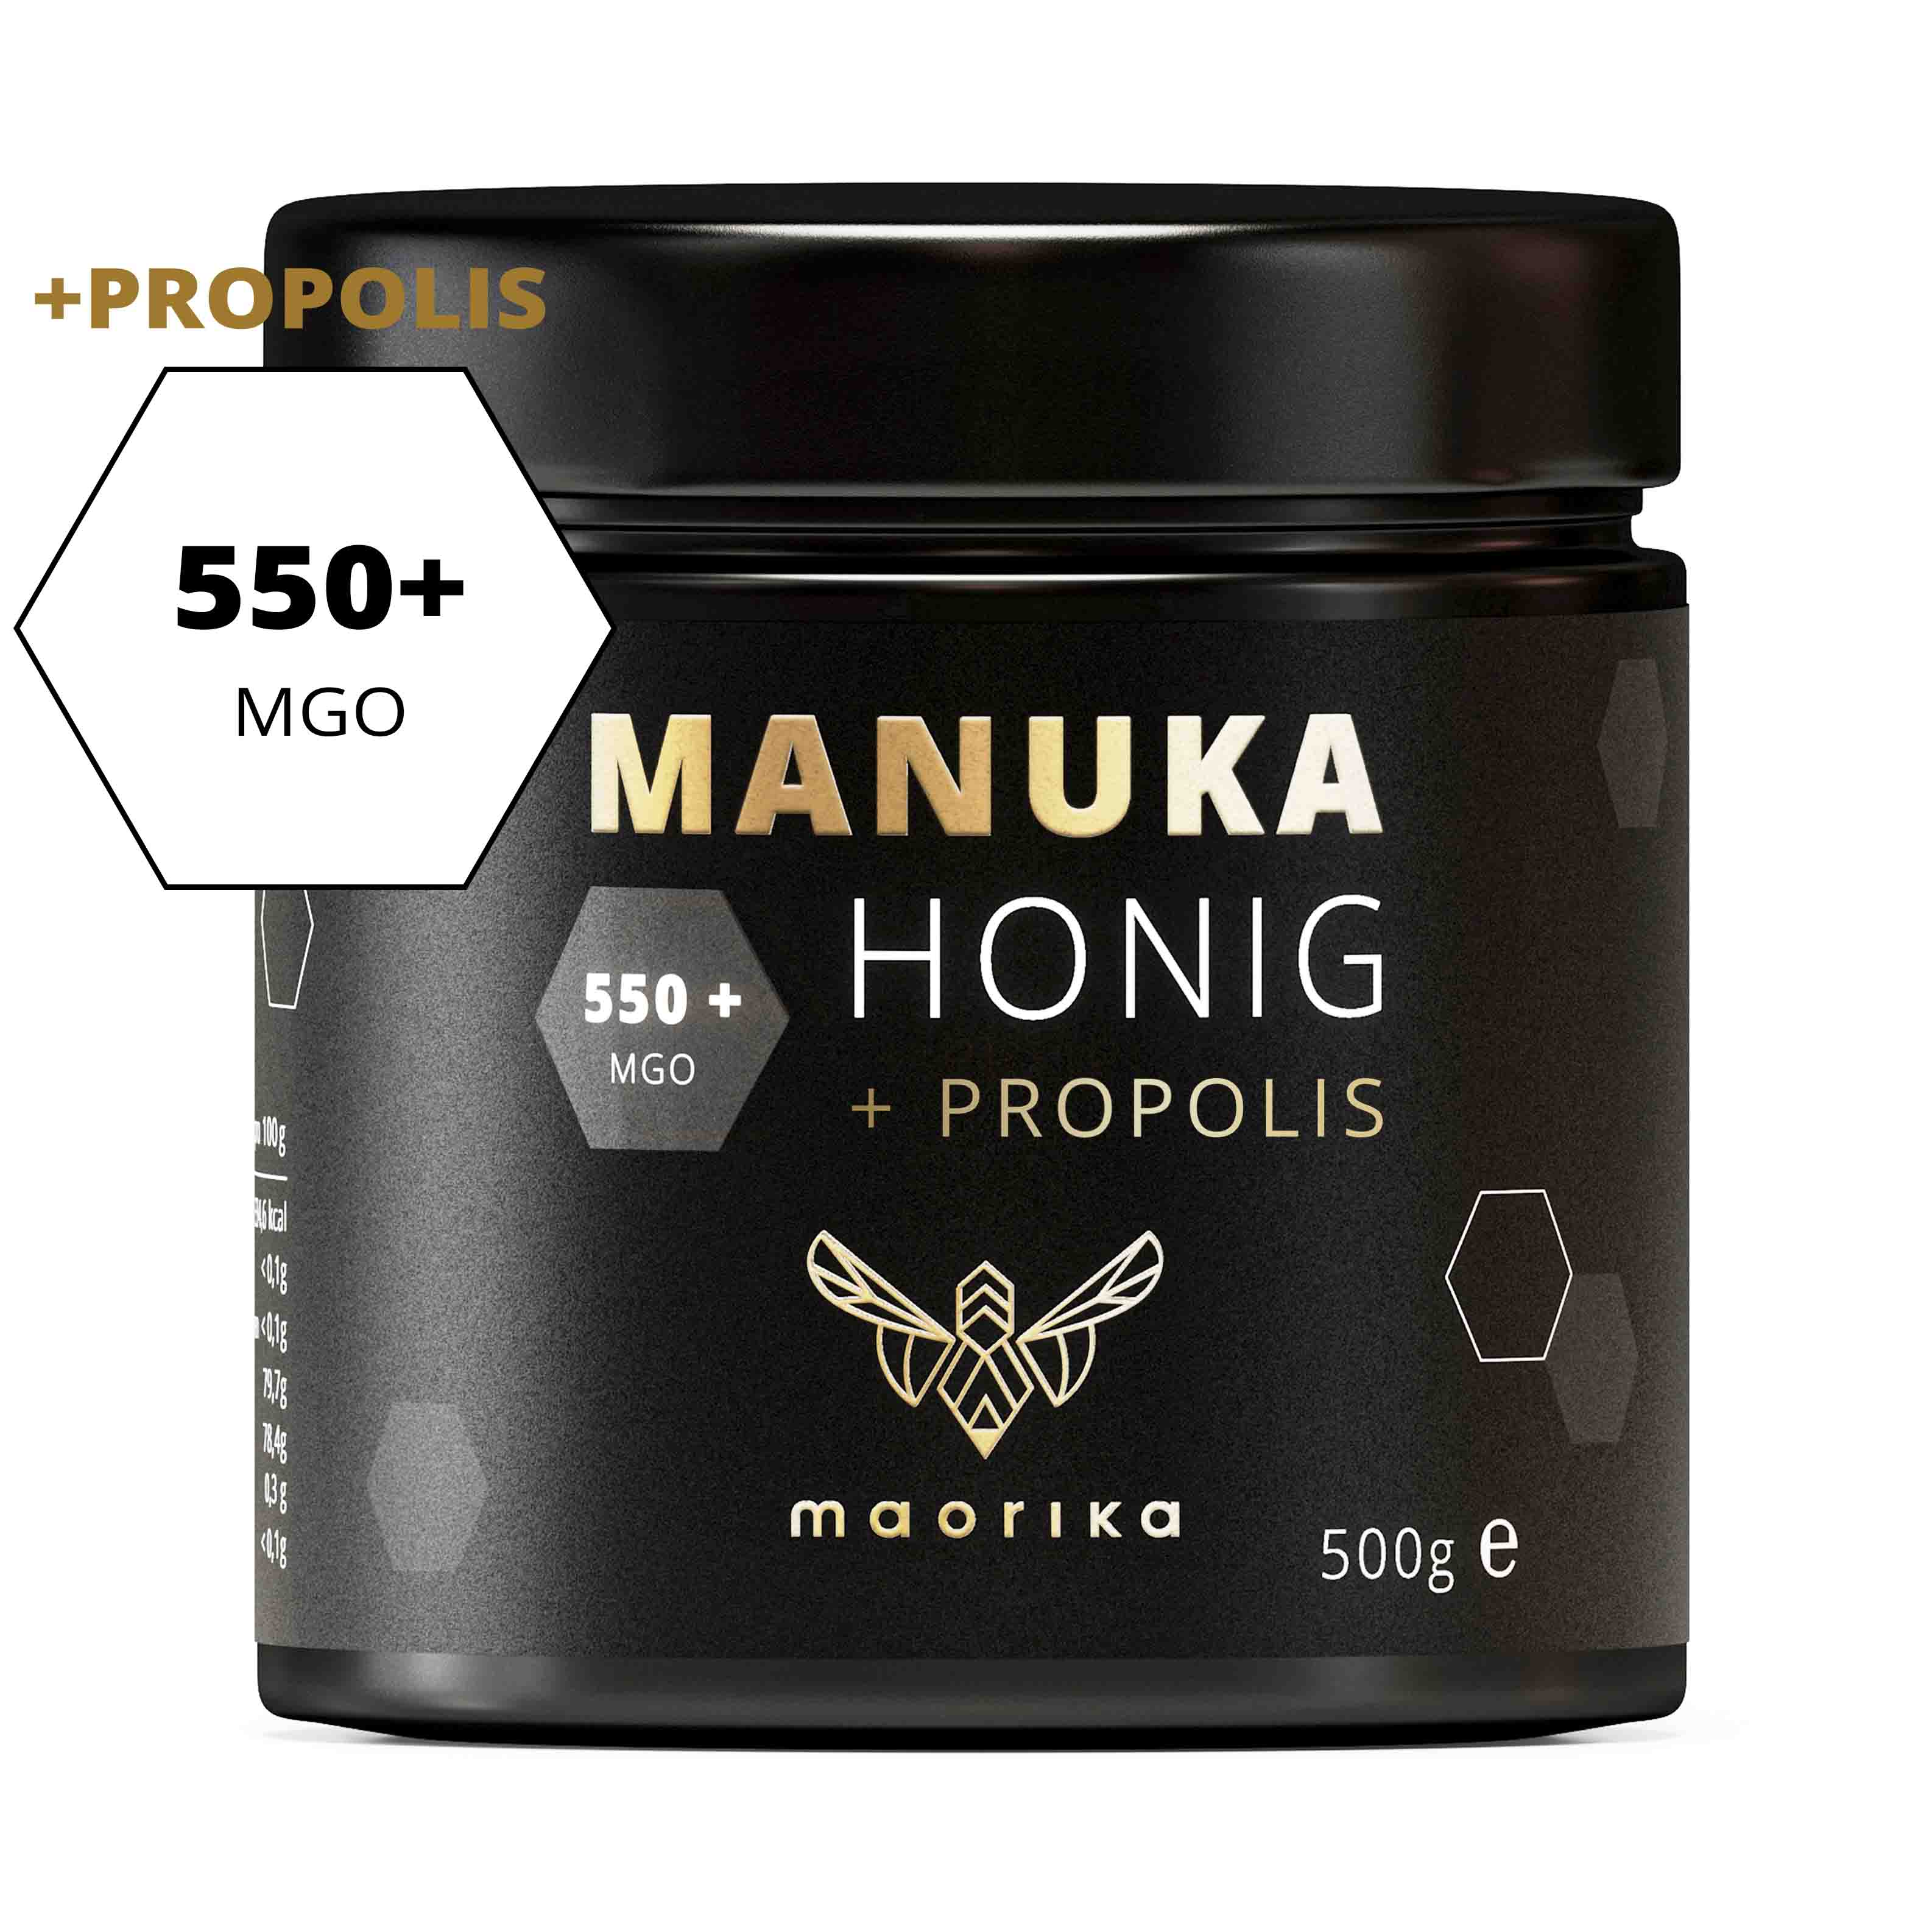 Manuka Honig MGO 550+ mit Propolisanteil